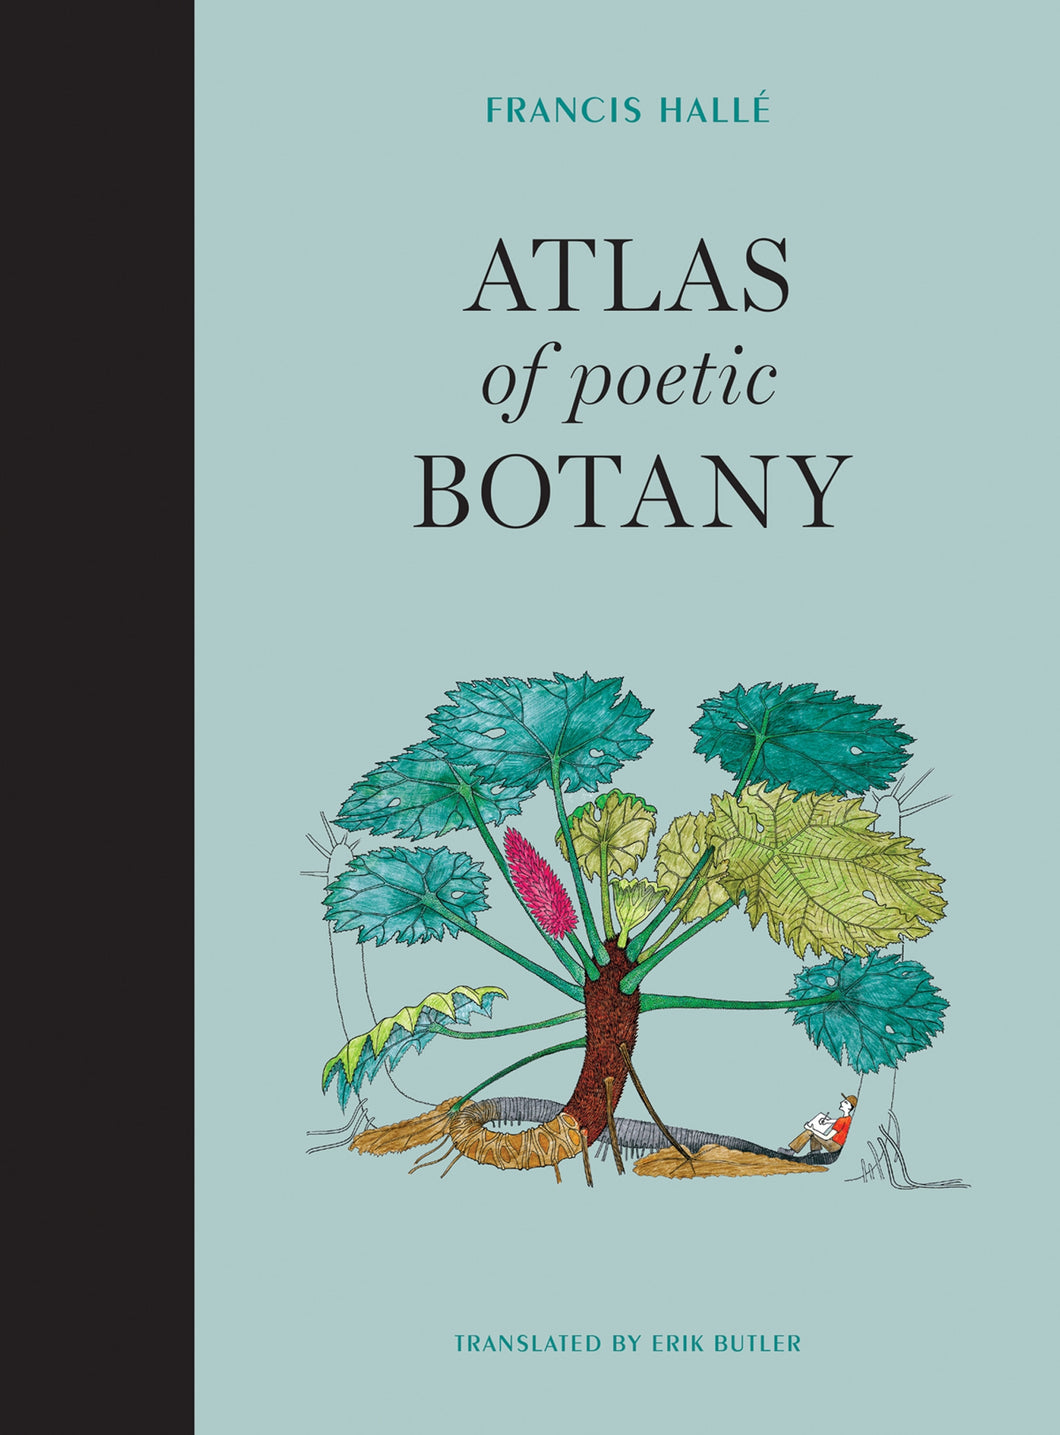 Atlas of Poetic Botany ร้านหนังสือและสิ่งของ เป็นร้านหนังสือภาษาอังกฤษหายาก และร้านกาแฟ หรือ บุ๊คคาเฟ่ ตั้งอยู่สุขุมวิท กรุงเทพ